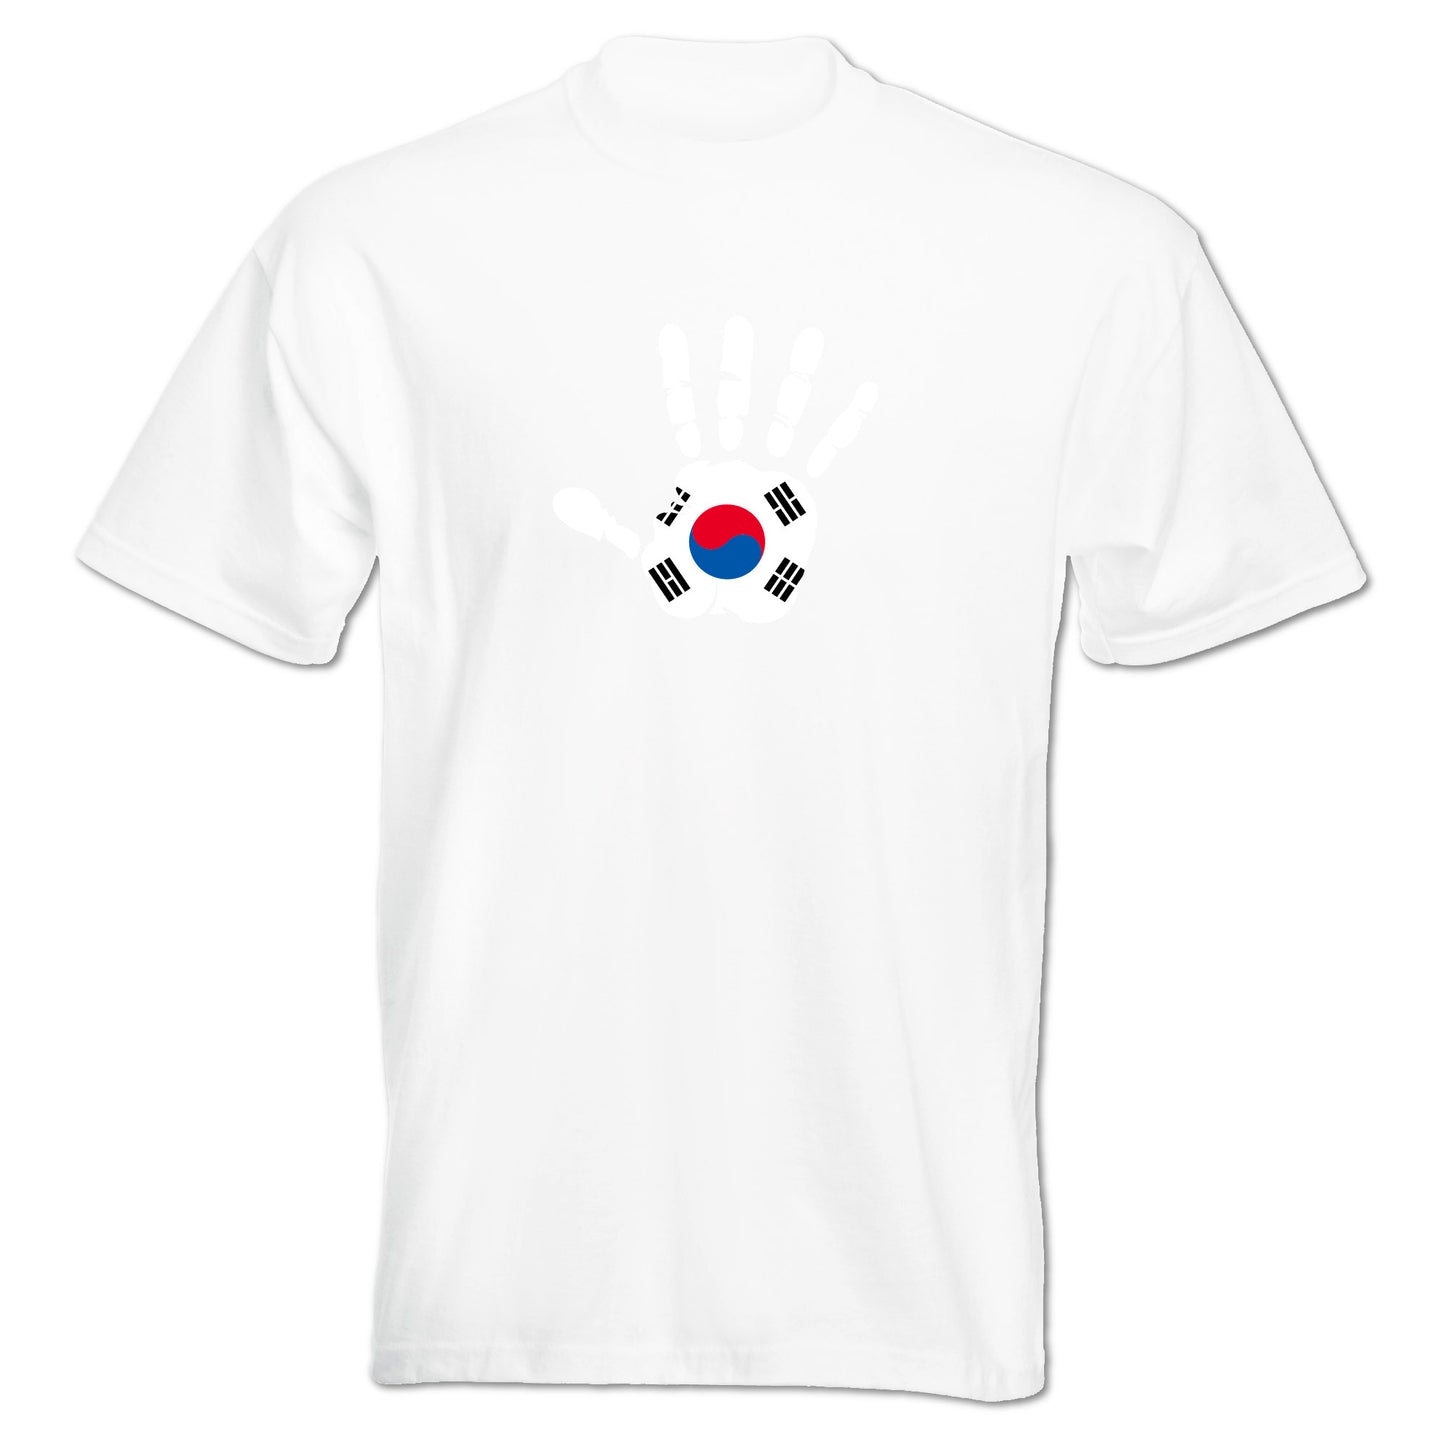 INDIGOS UG - T-Shirt Herren - Südkorea - Hand - Fussball